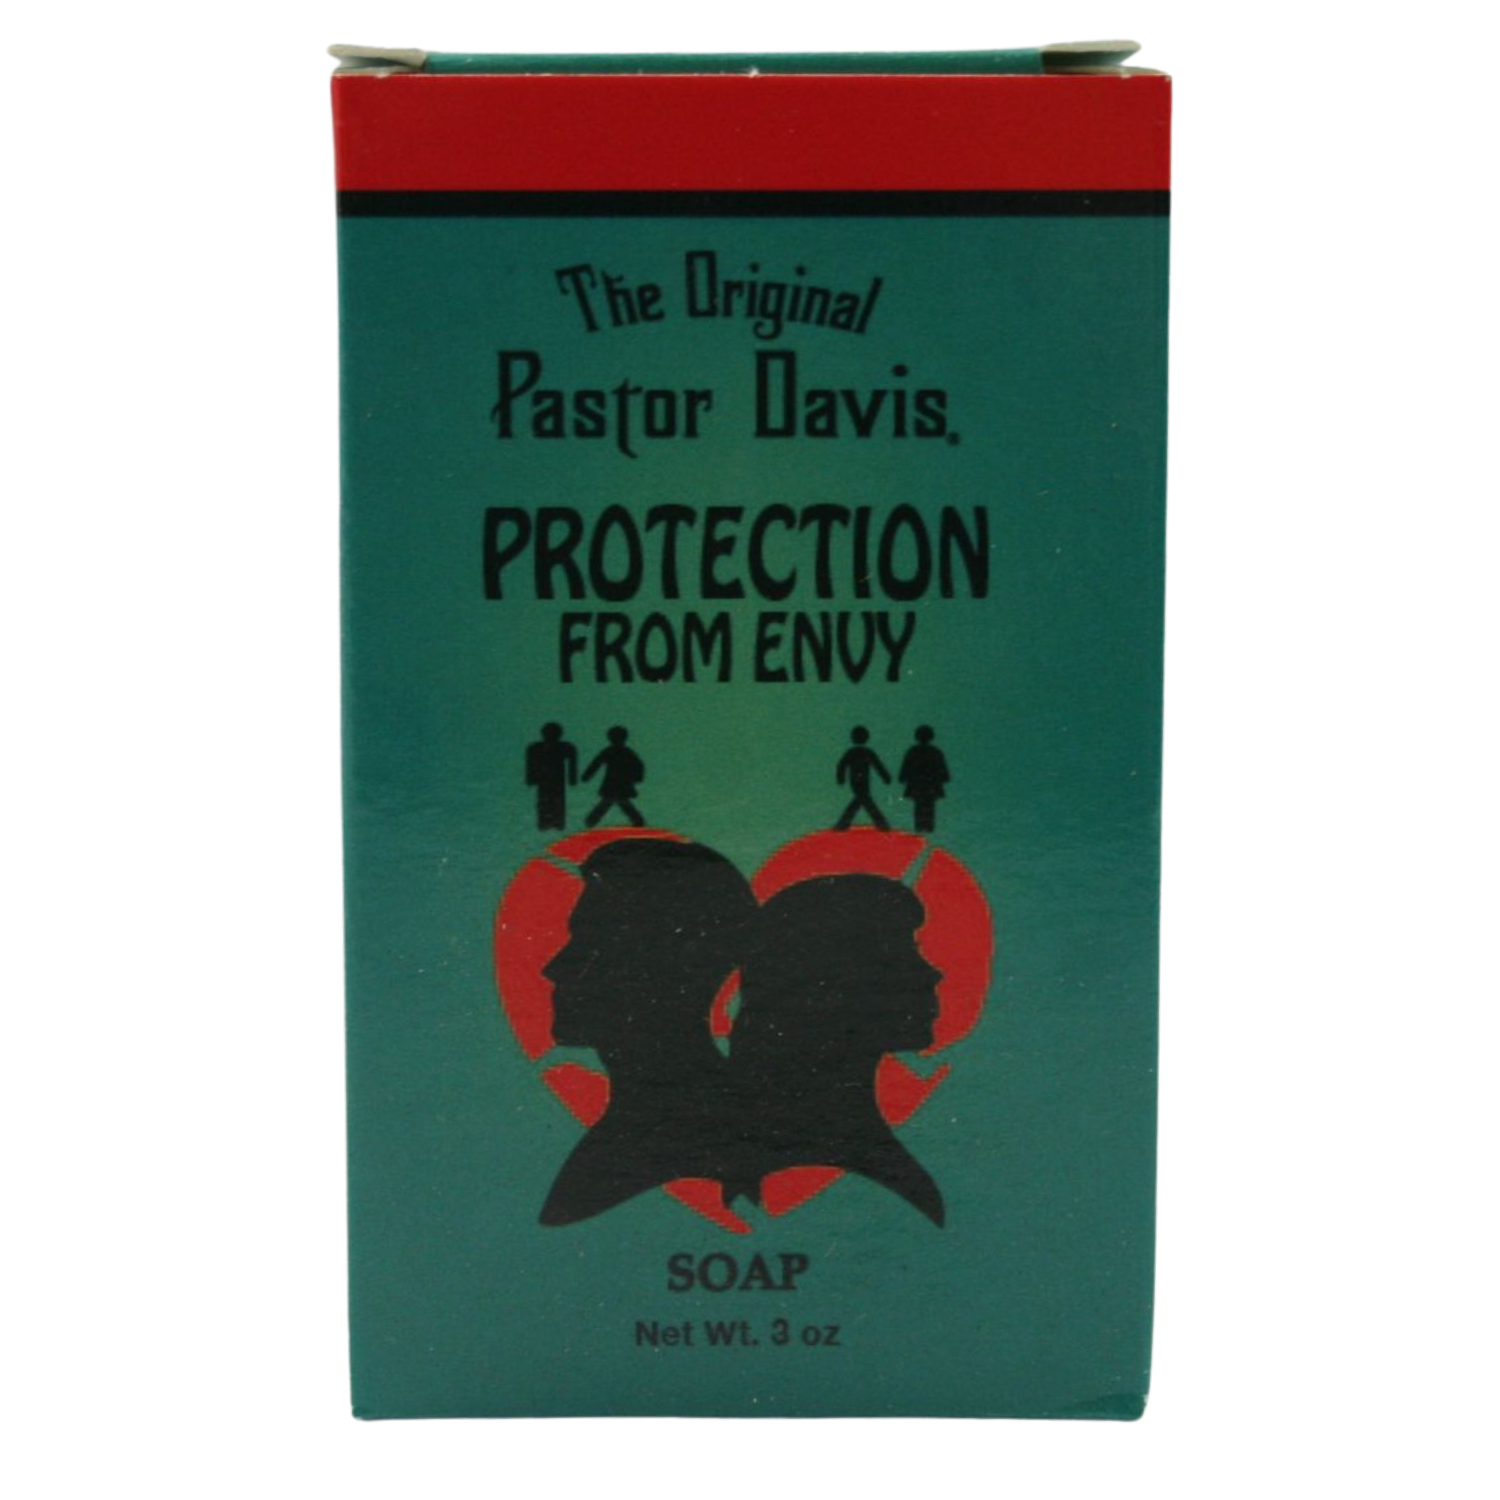 The Original Pastor Davis Protection from Envy Soap